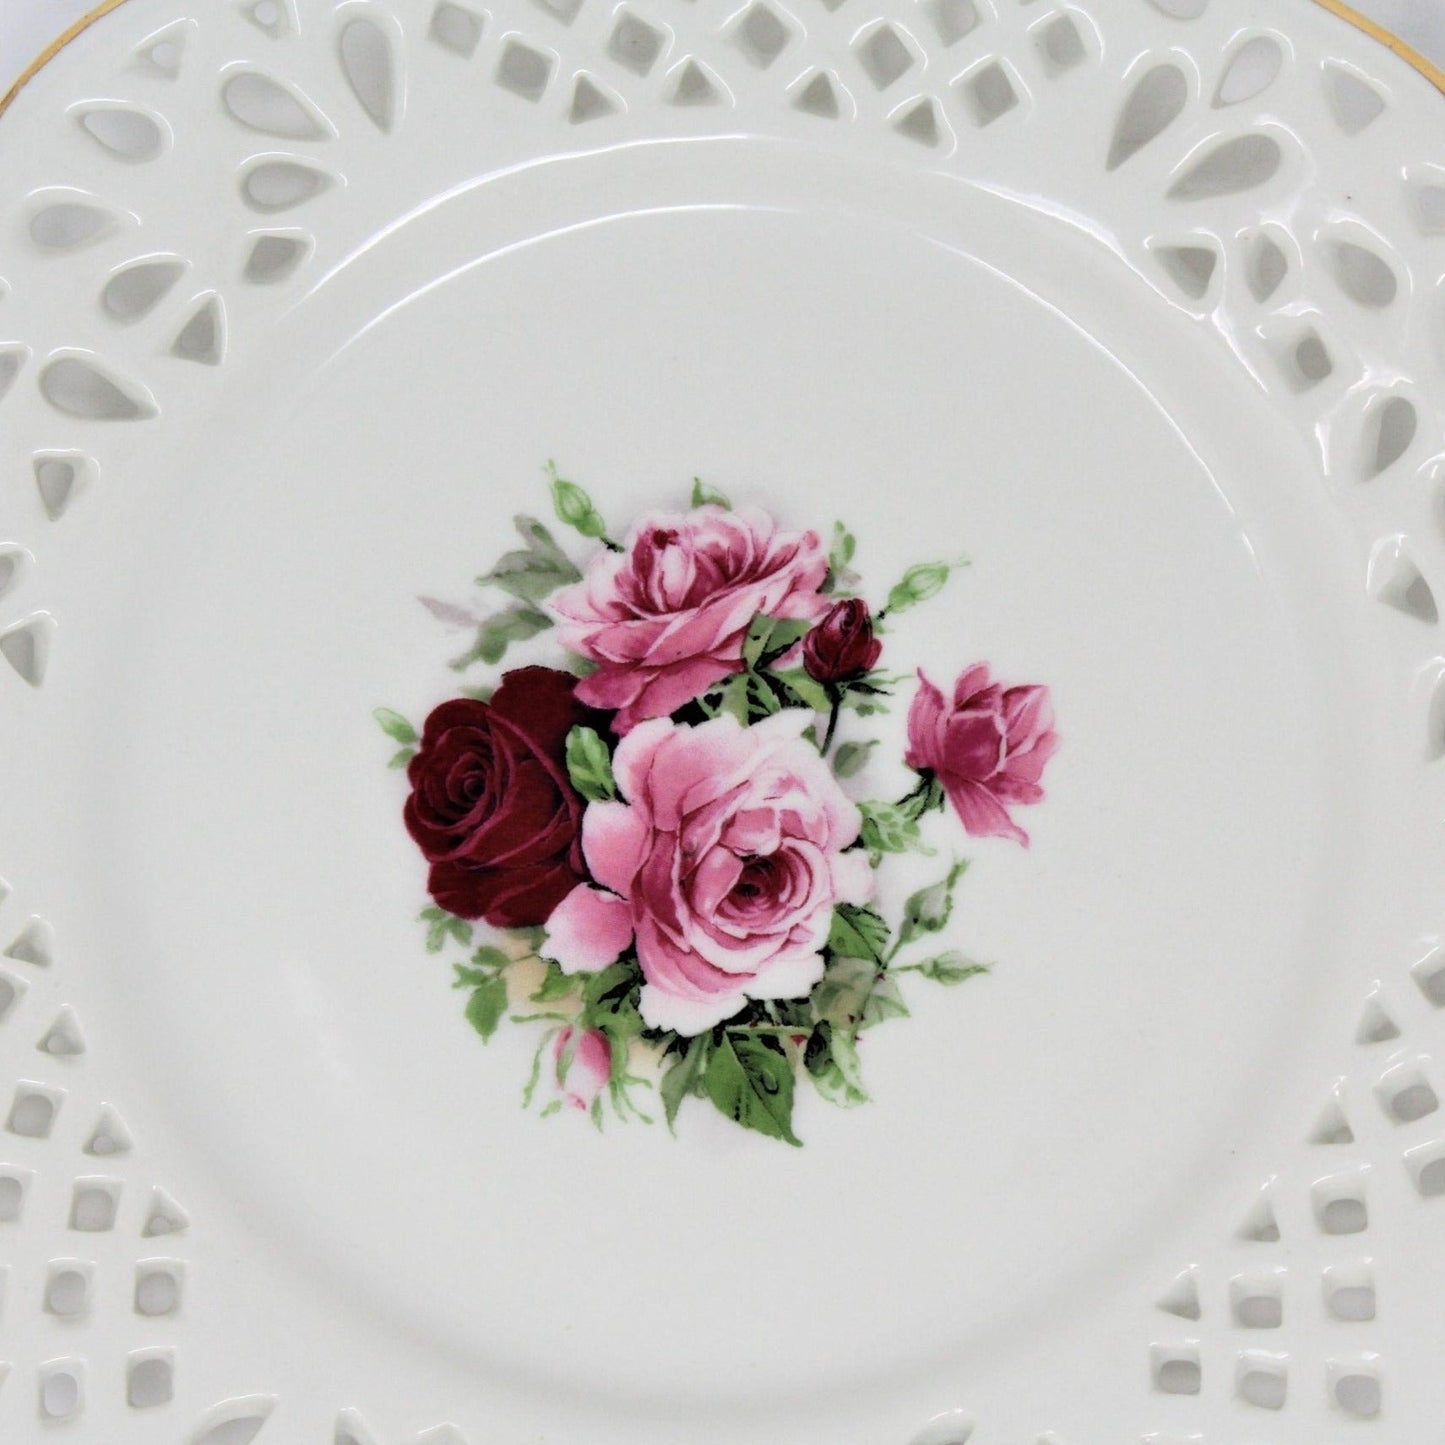 Decorative Plate, Baum Bros Formalities, Victorian Rose, Pierced, Vintage